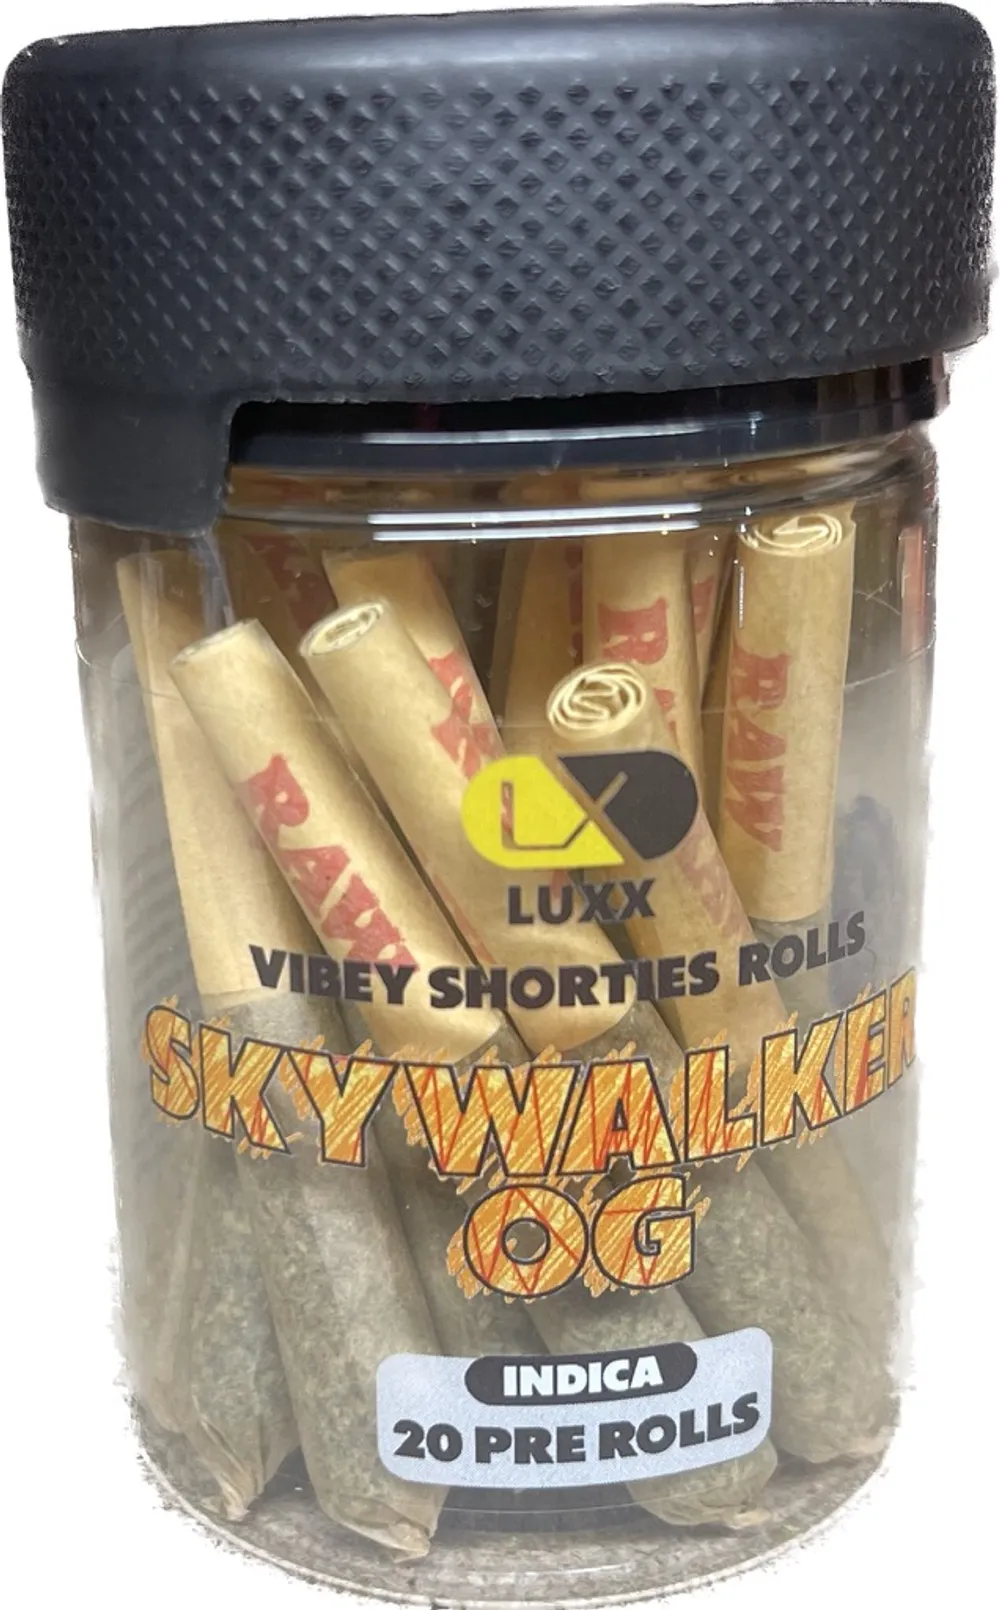 Luxx Vibey Shorties Rolls - Skywalker OG 20ct | Indica: Pineapple Cream